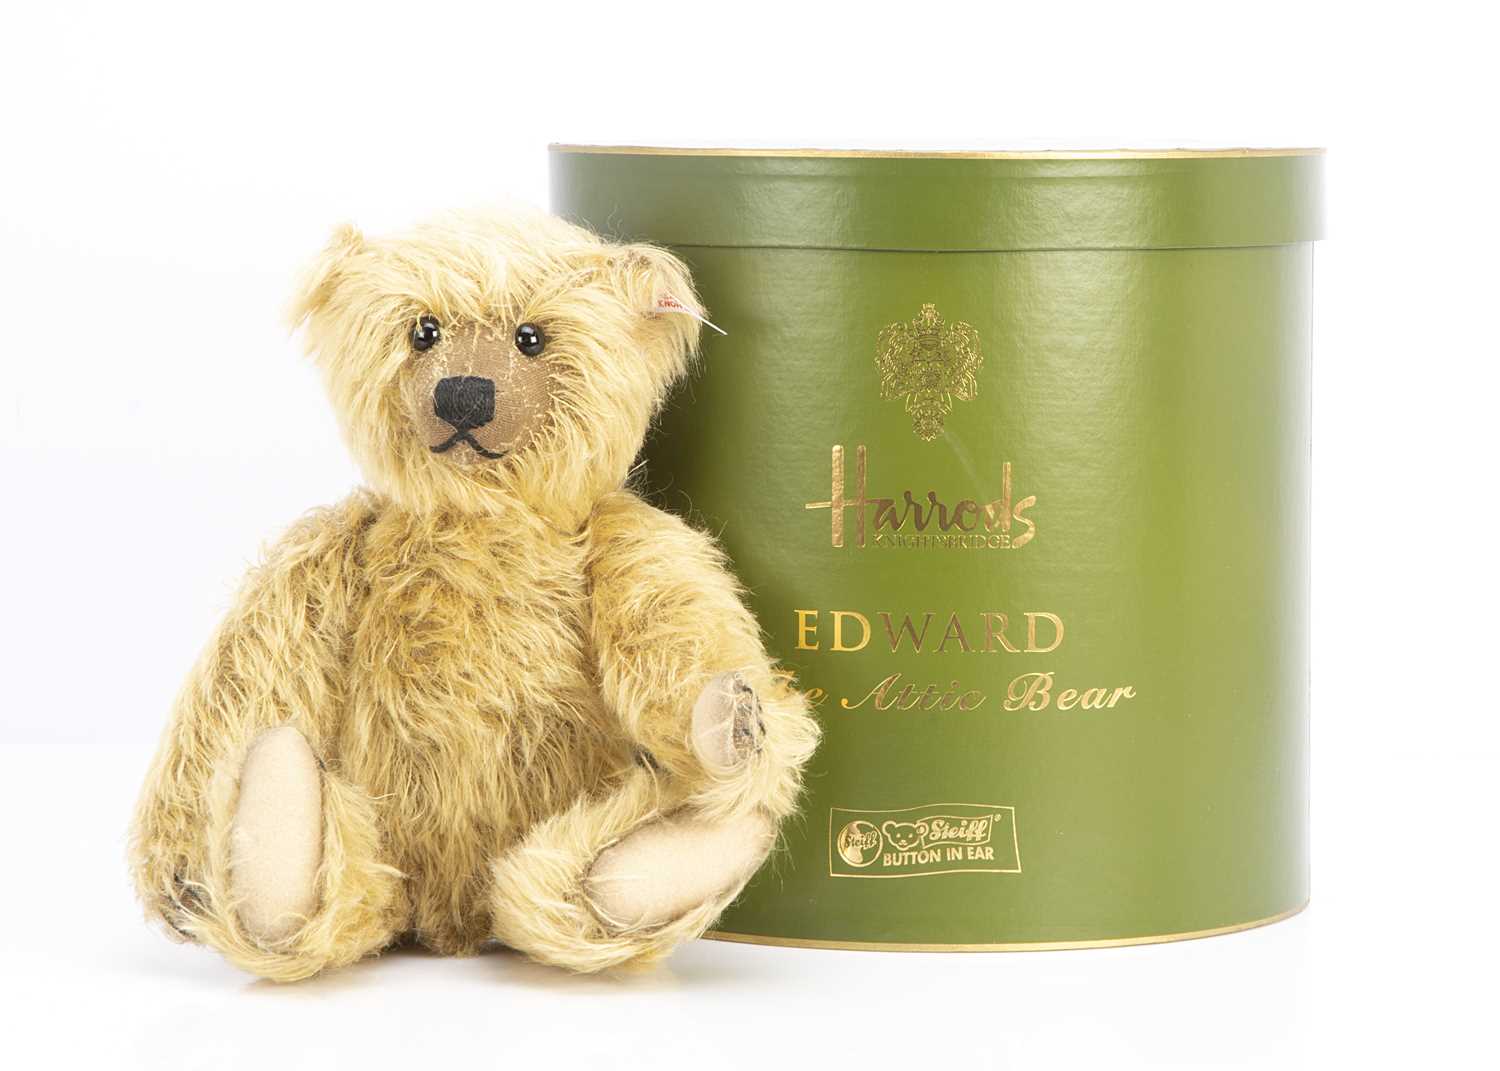 Lot 11 - A Steiff limited edition Harrods Edward The Attic Teddy Bear